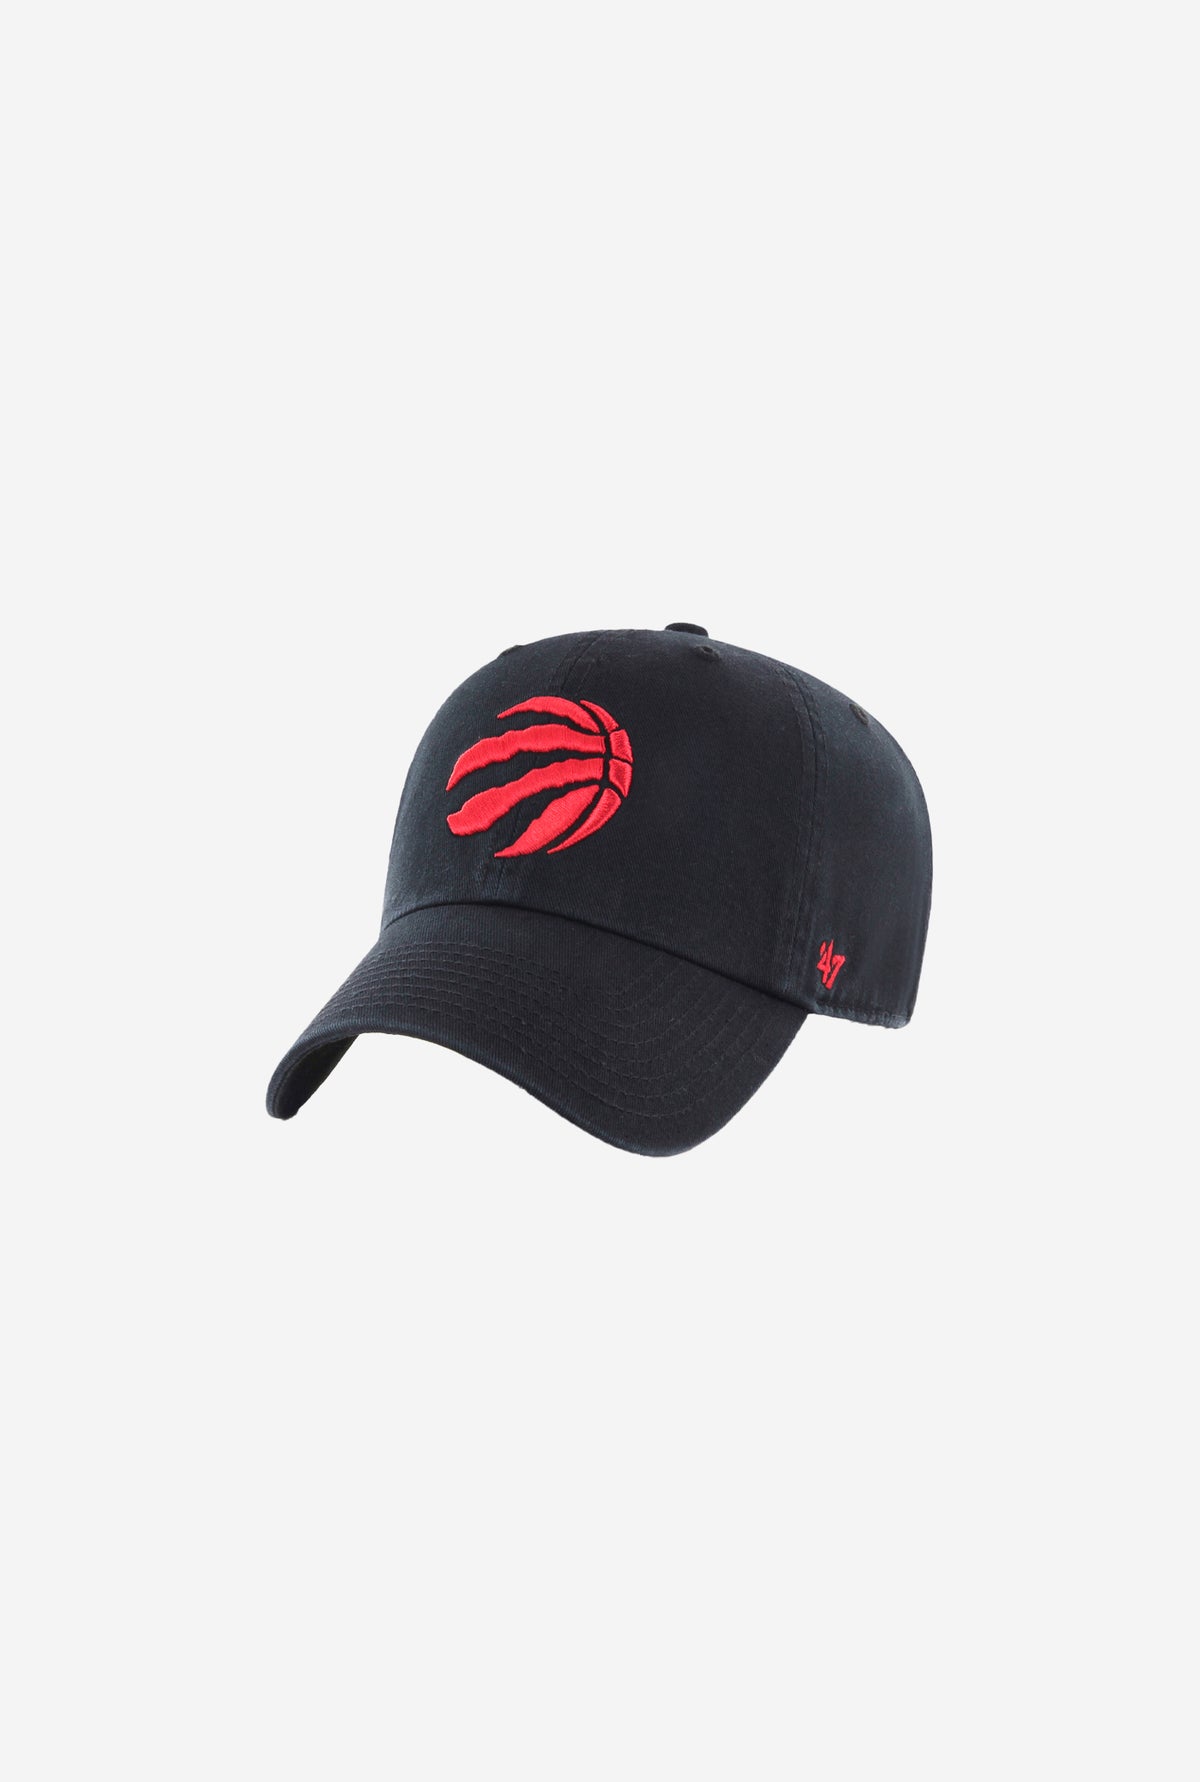 Toronto Raptors Clean Up Cap TC - Black/Red